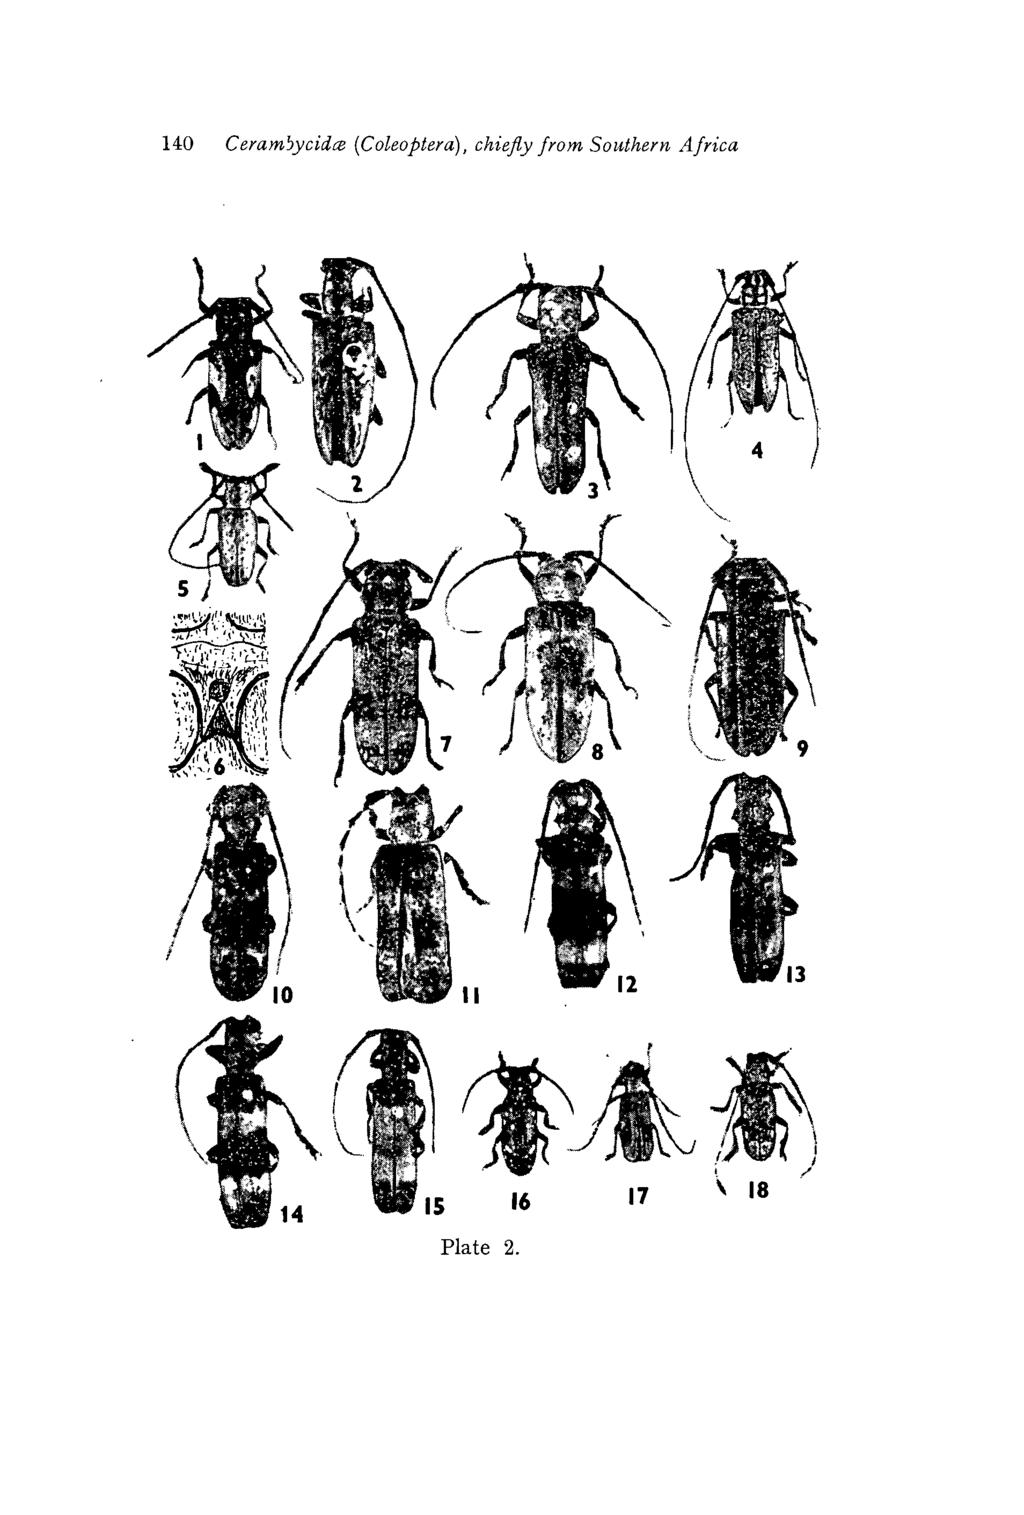 140 Ceramjycidce (Coleoptera),